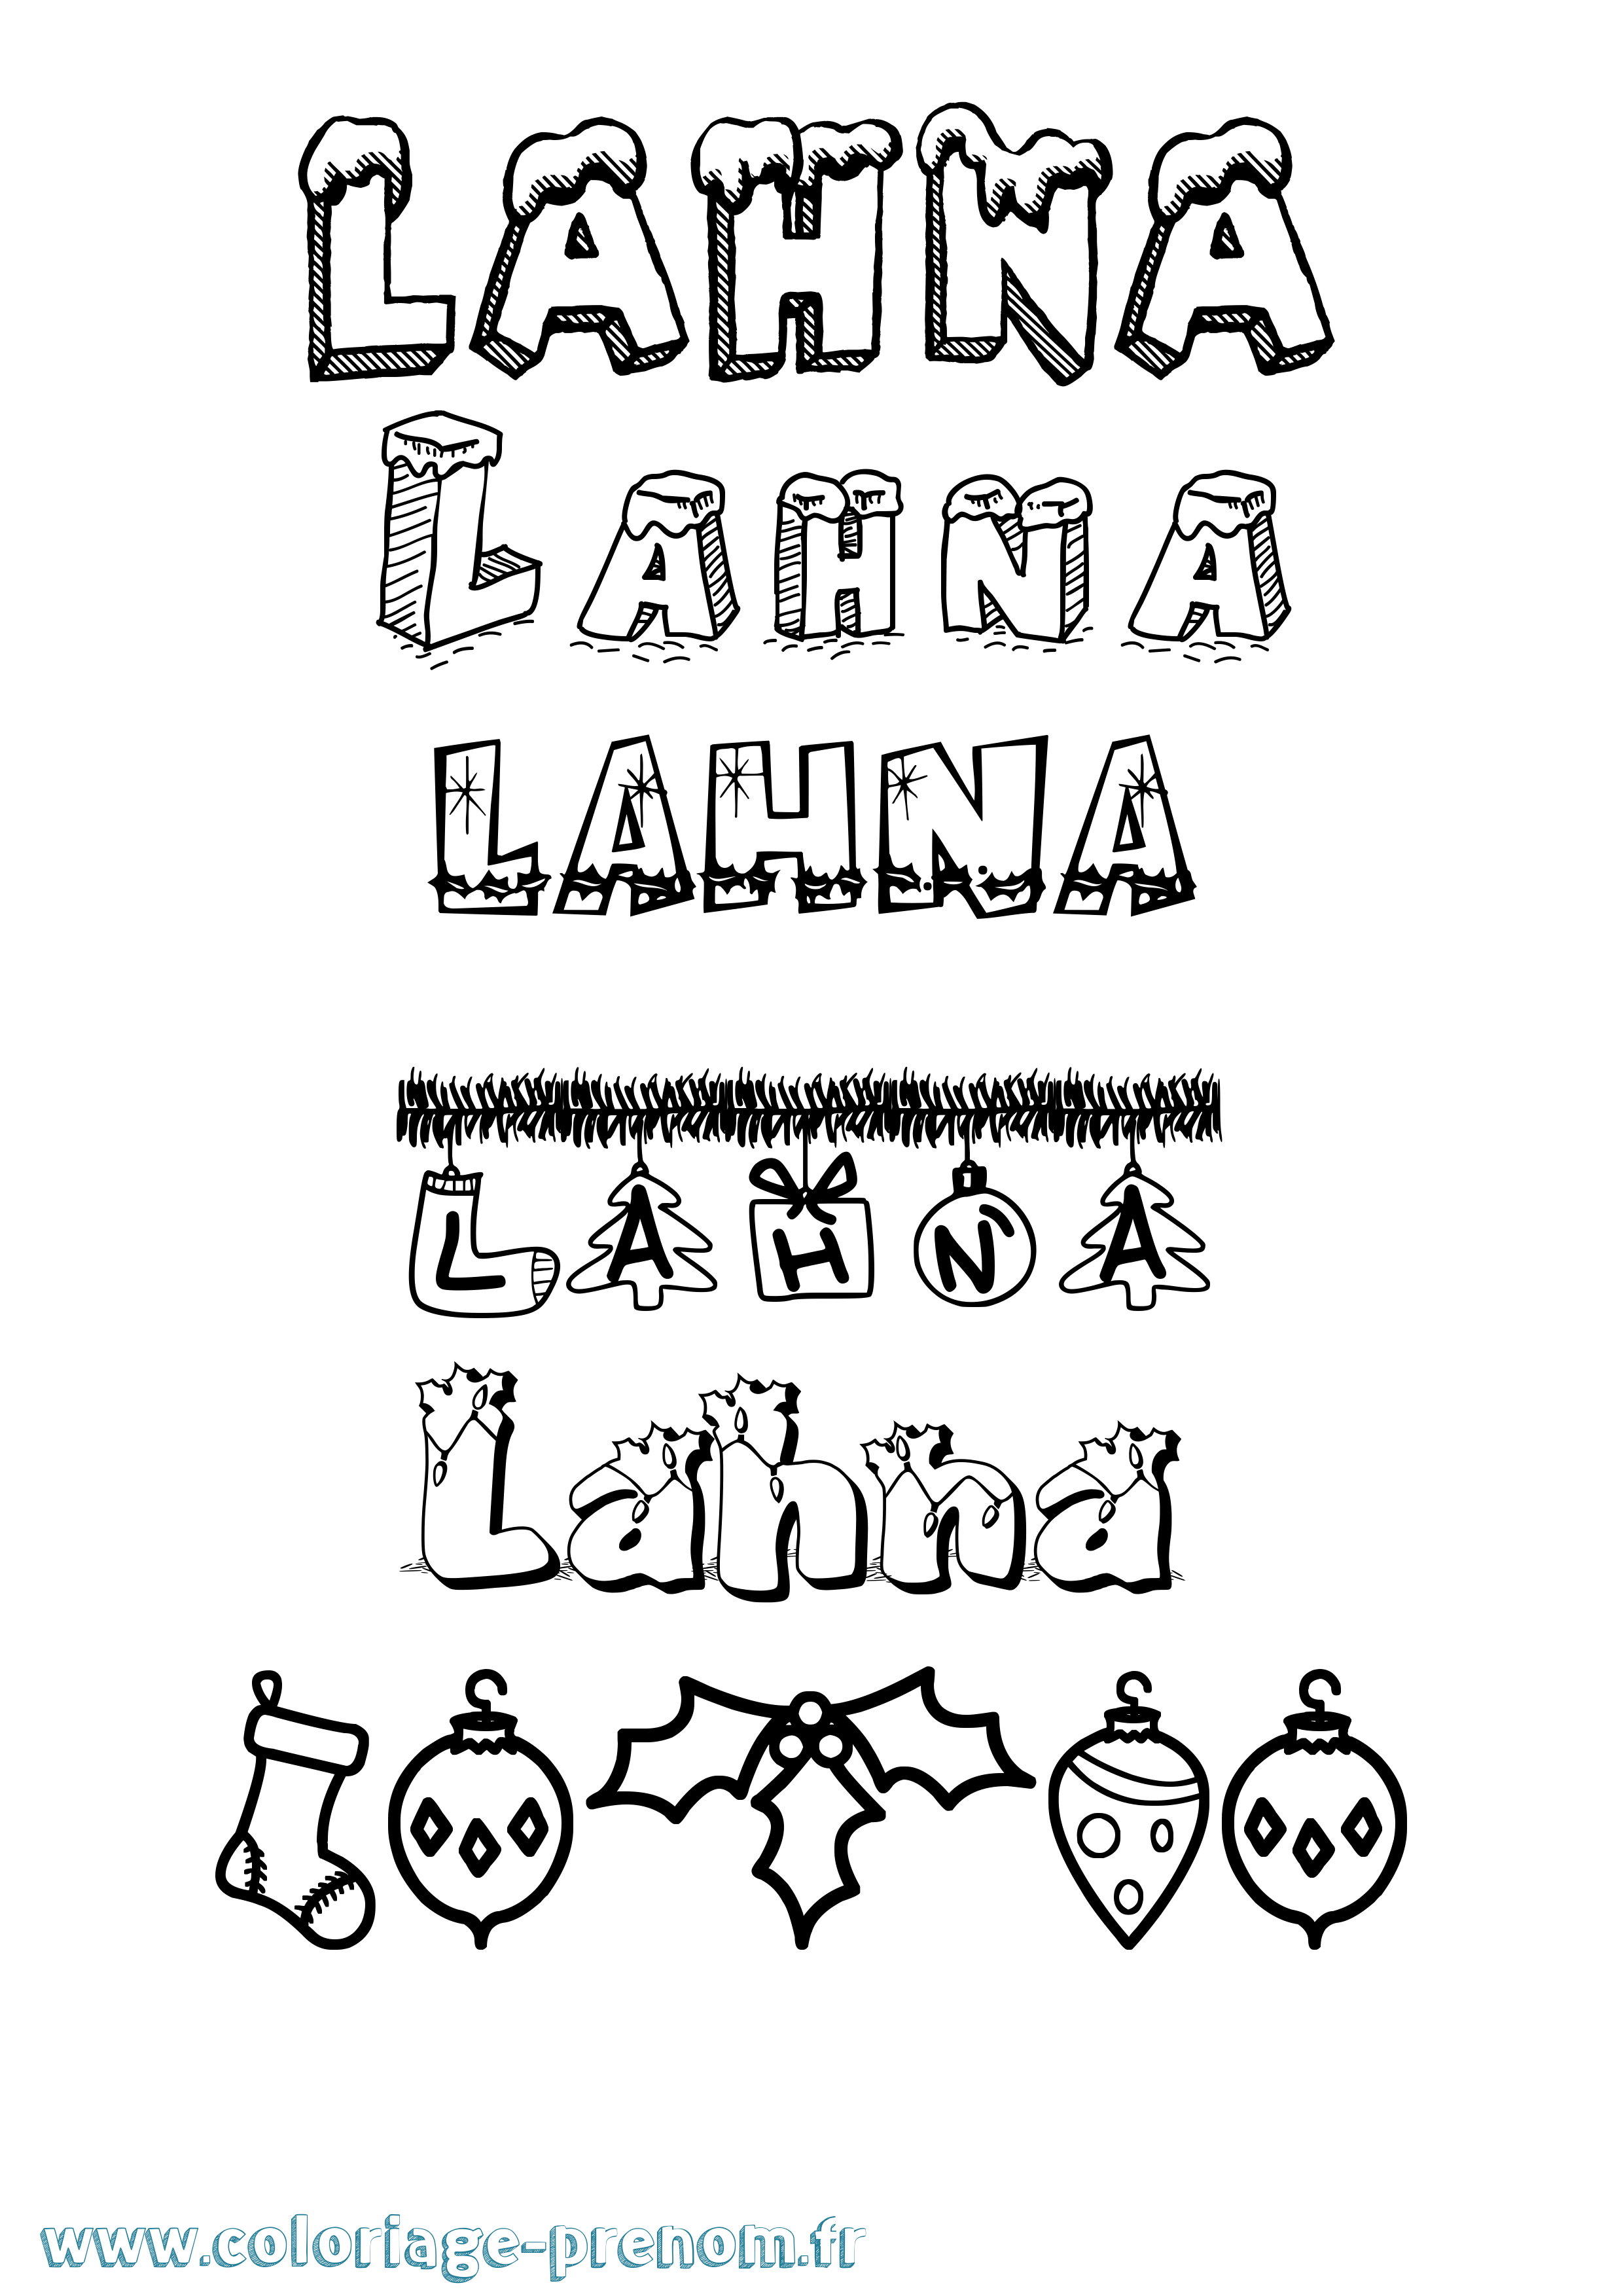 Coloriage prénom Lahna